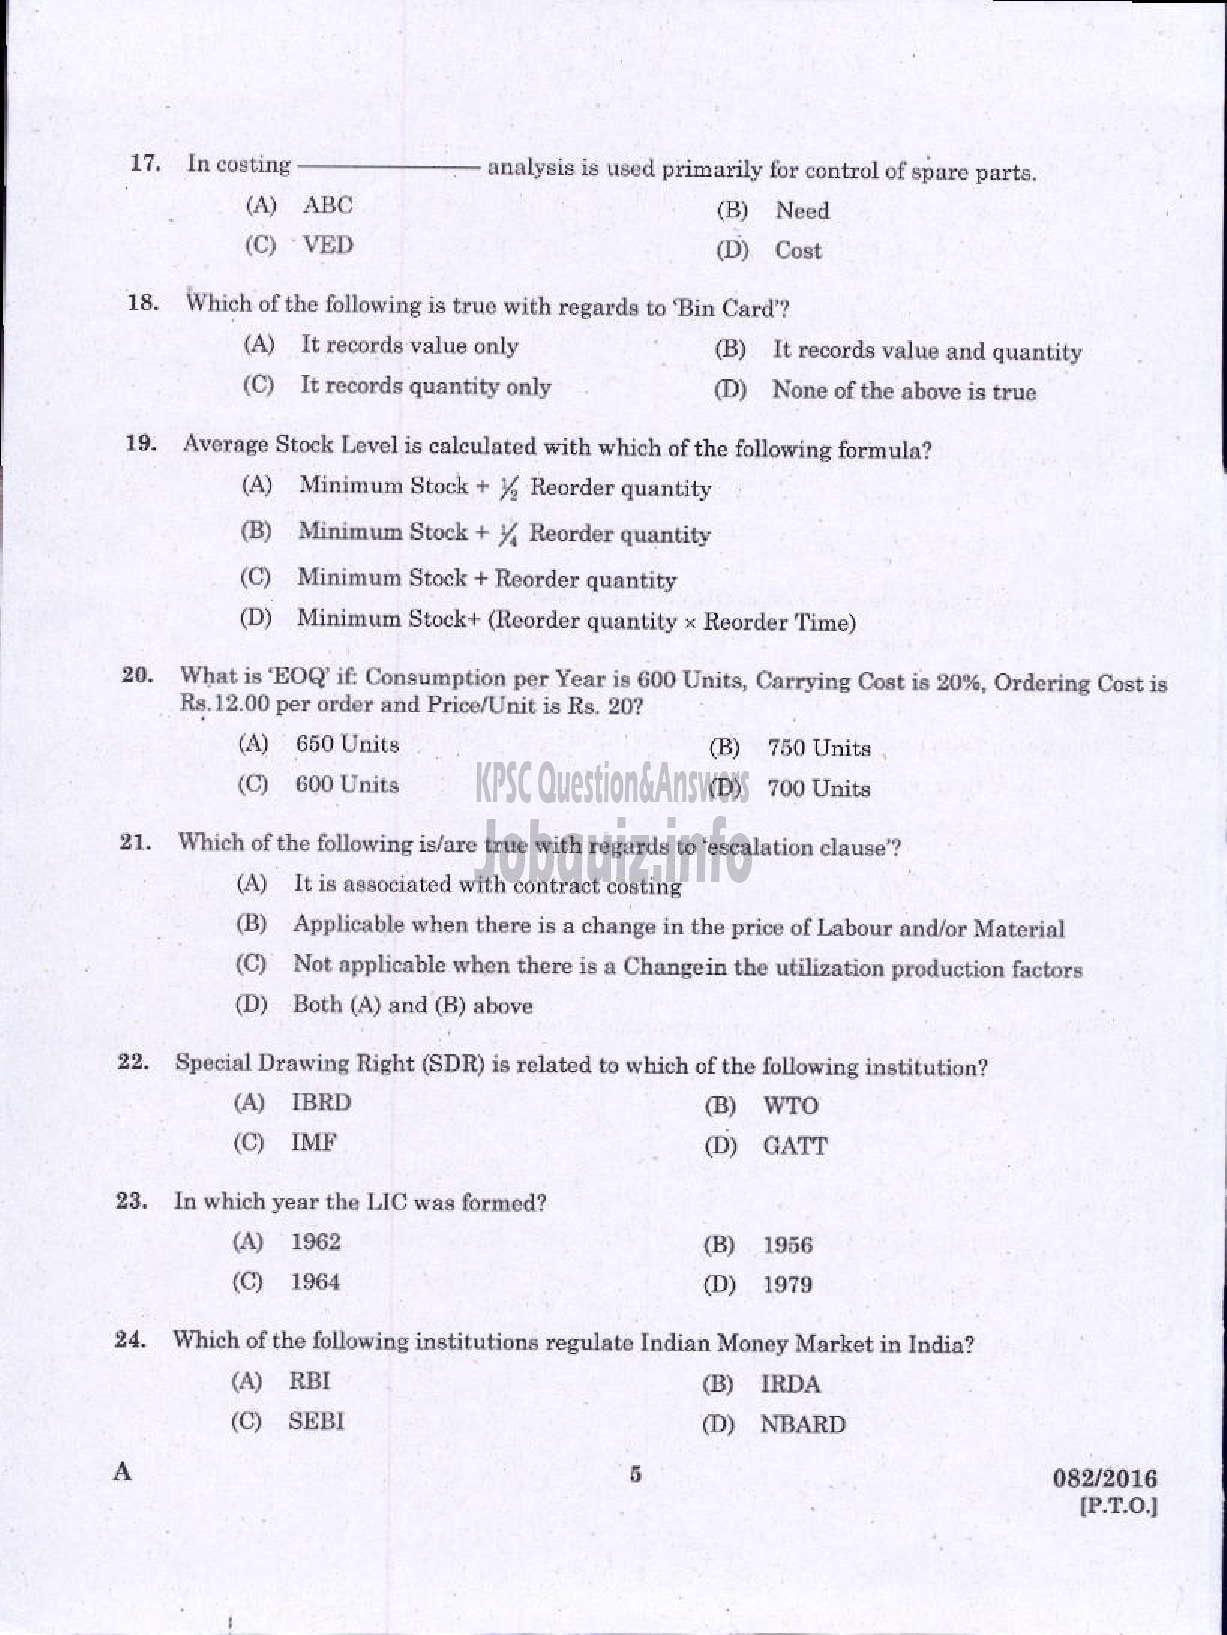 Kerala PSC Question Paper - ACCOUNTANT /JUNIOR ACCOUNTANT /ACCOUNTS ASSISTANT VARIOUS COMPANIES/CORPNS/BOARDS/SOCIETIES-3